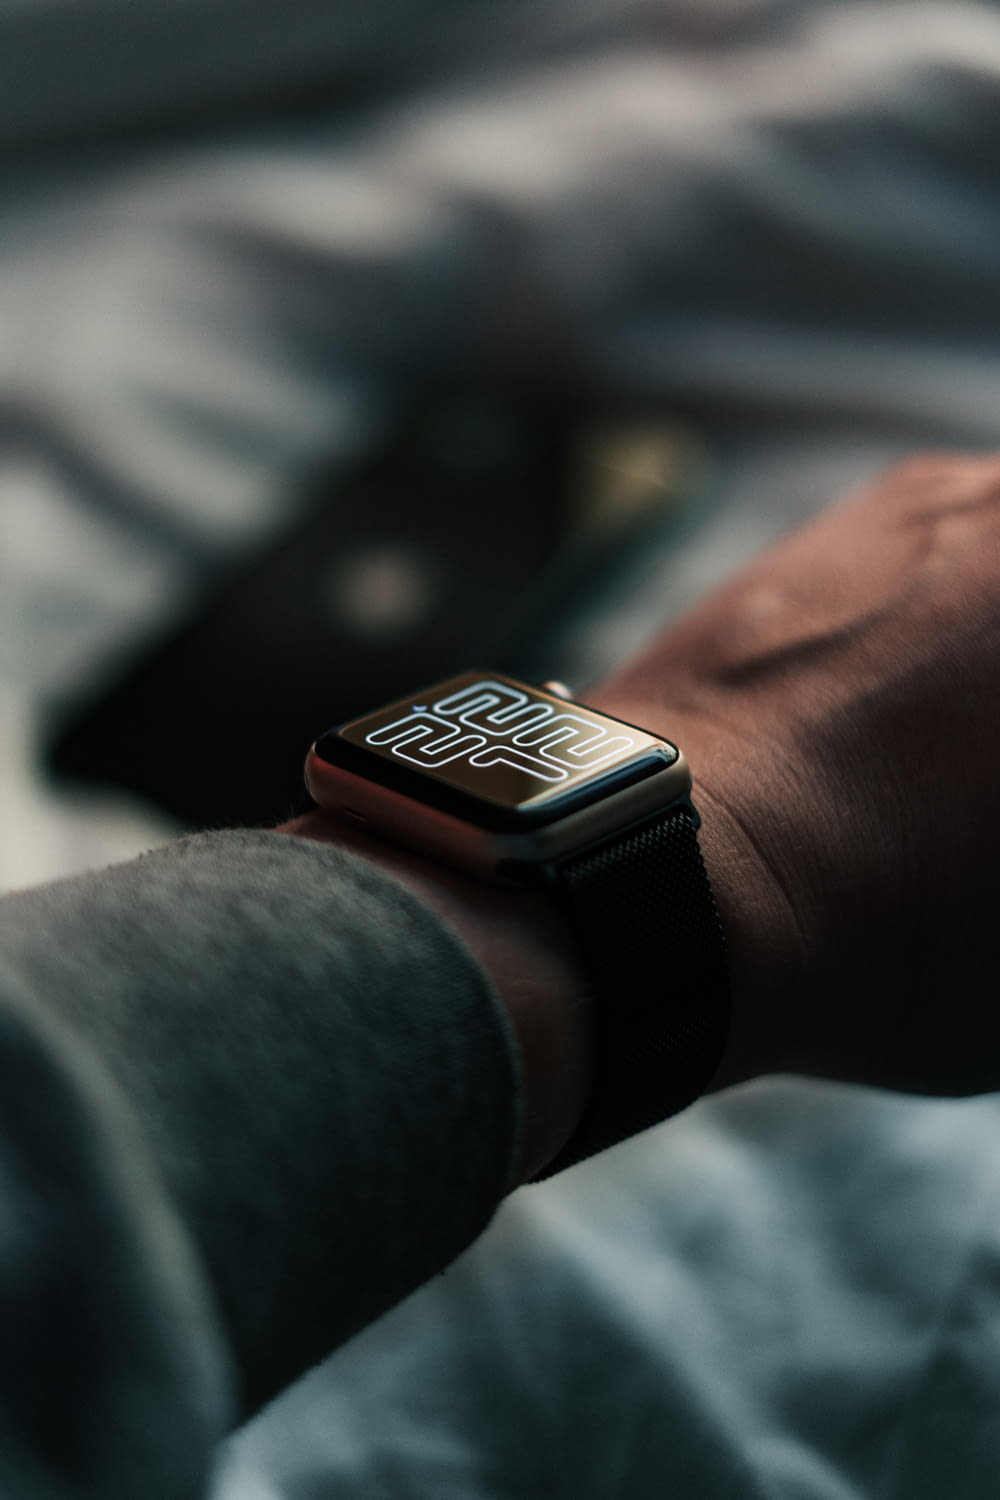 smartwatch displaying 22:12 time